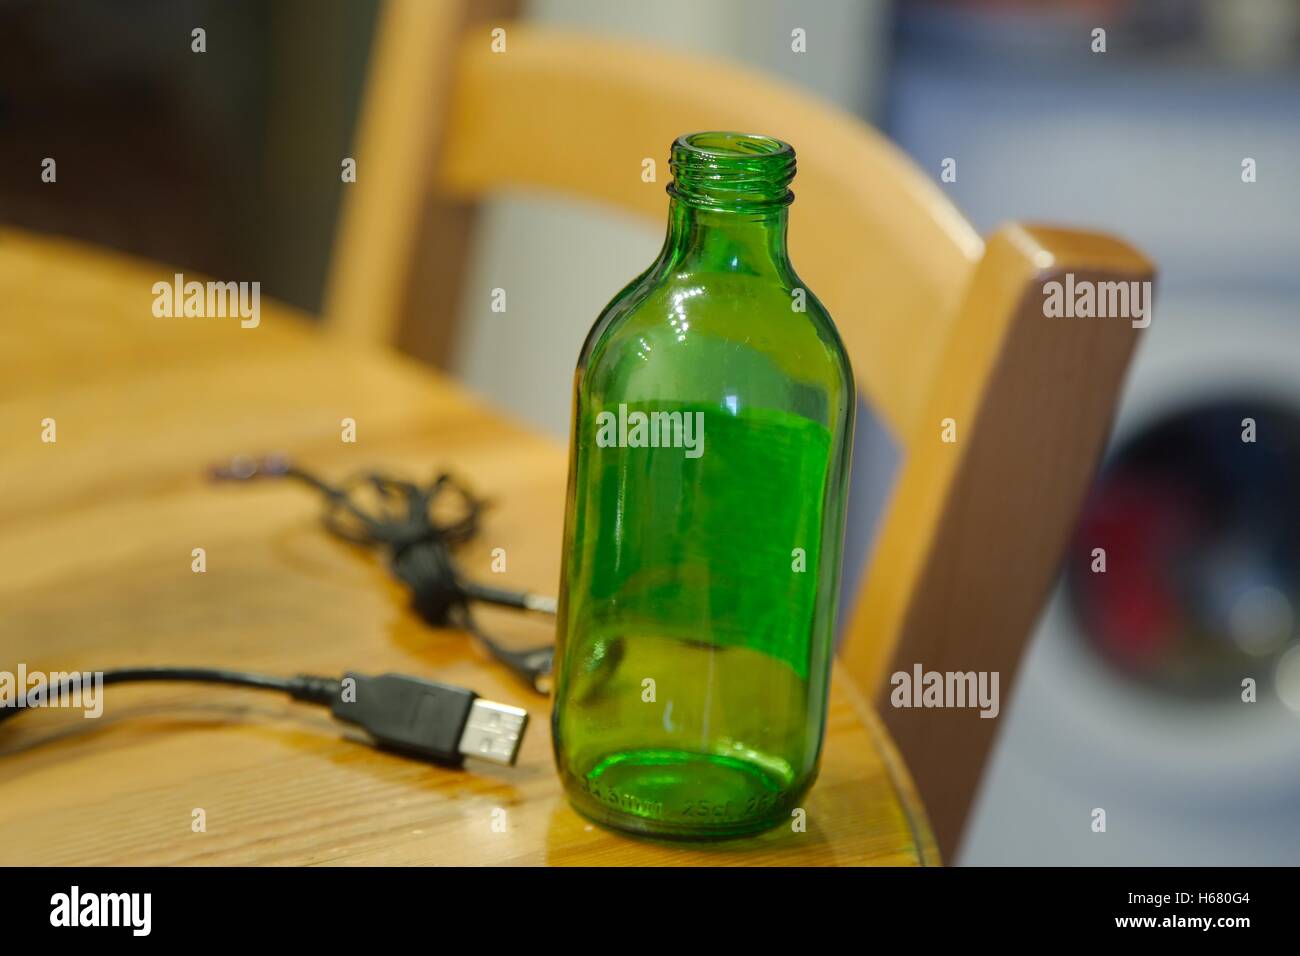 Empty bottle on table Stock Photo